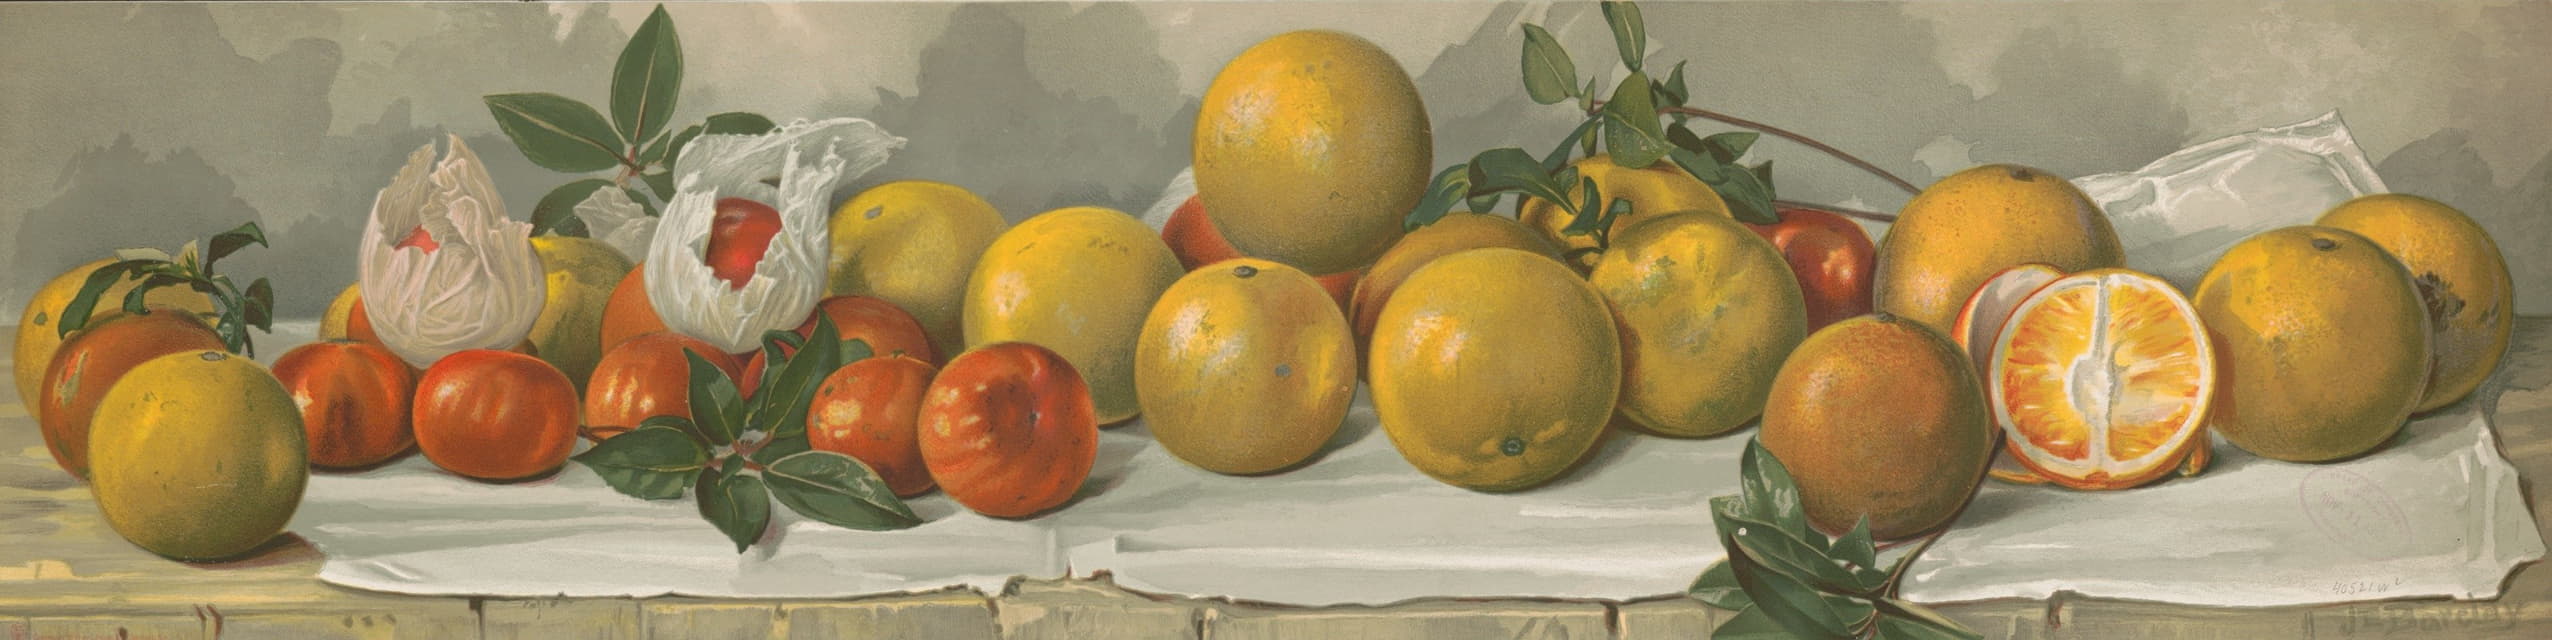 J. E. Barclay - Study of oranges